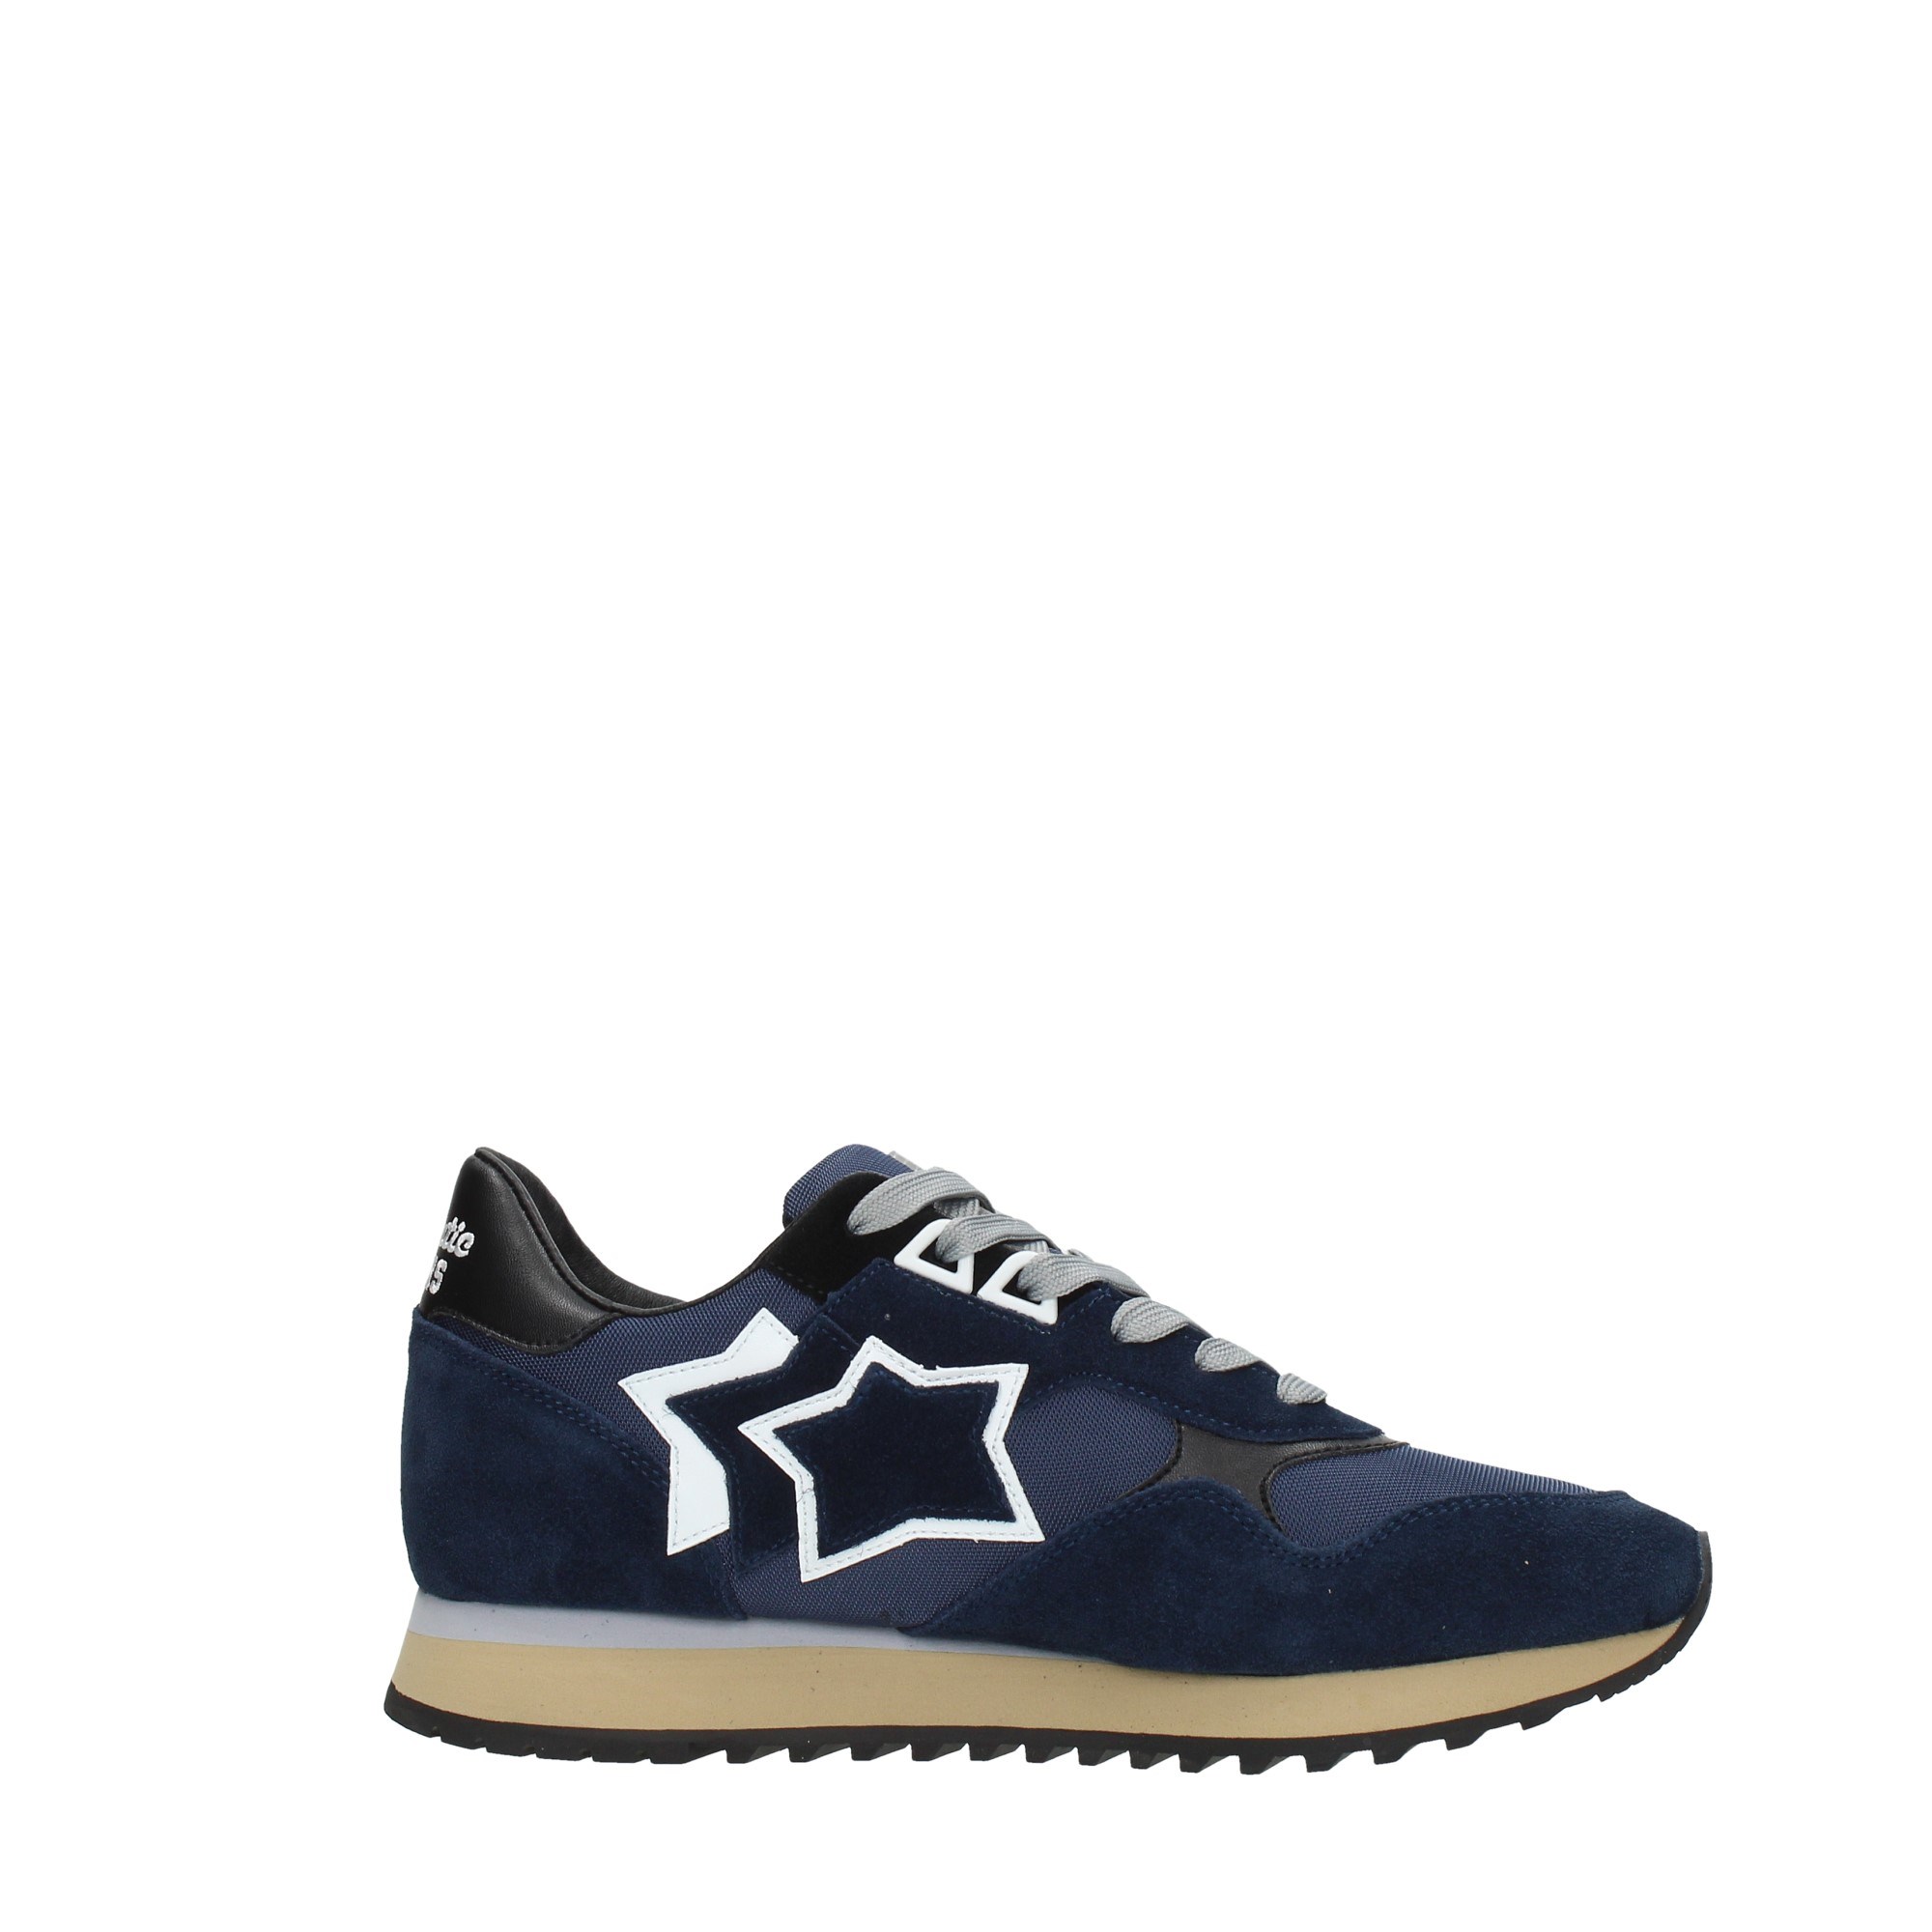 Atlantic Stars Shoes Man Sneakers Blue DRACO GALAXY